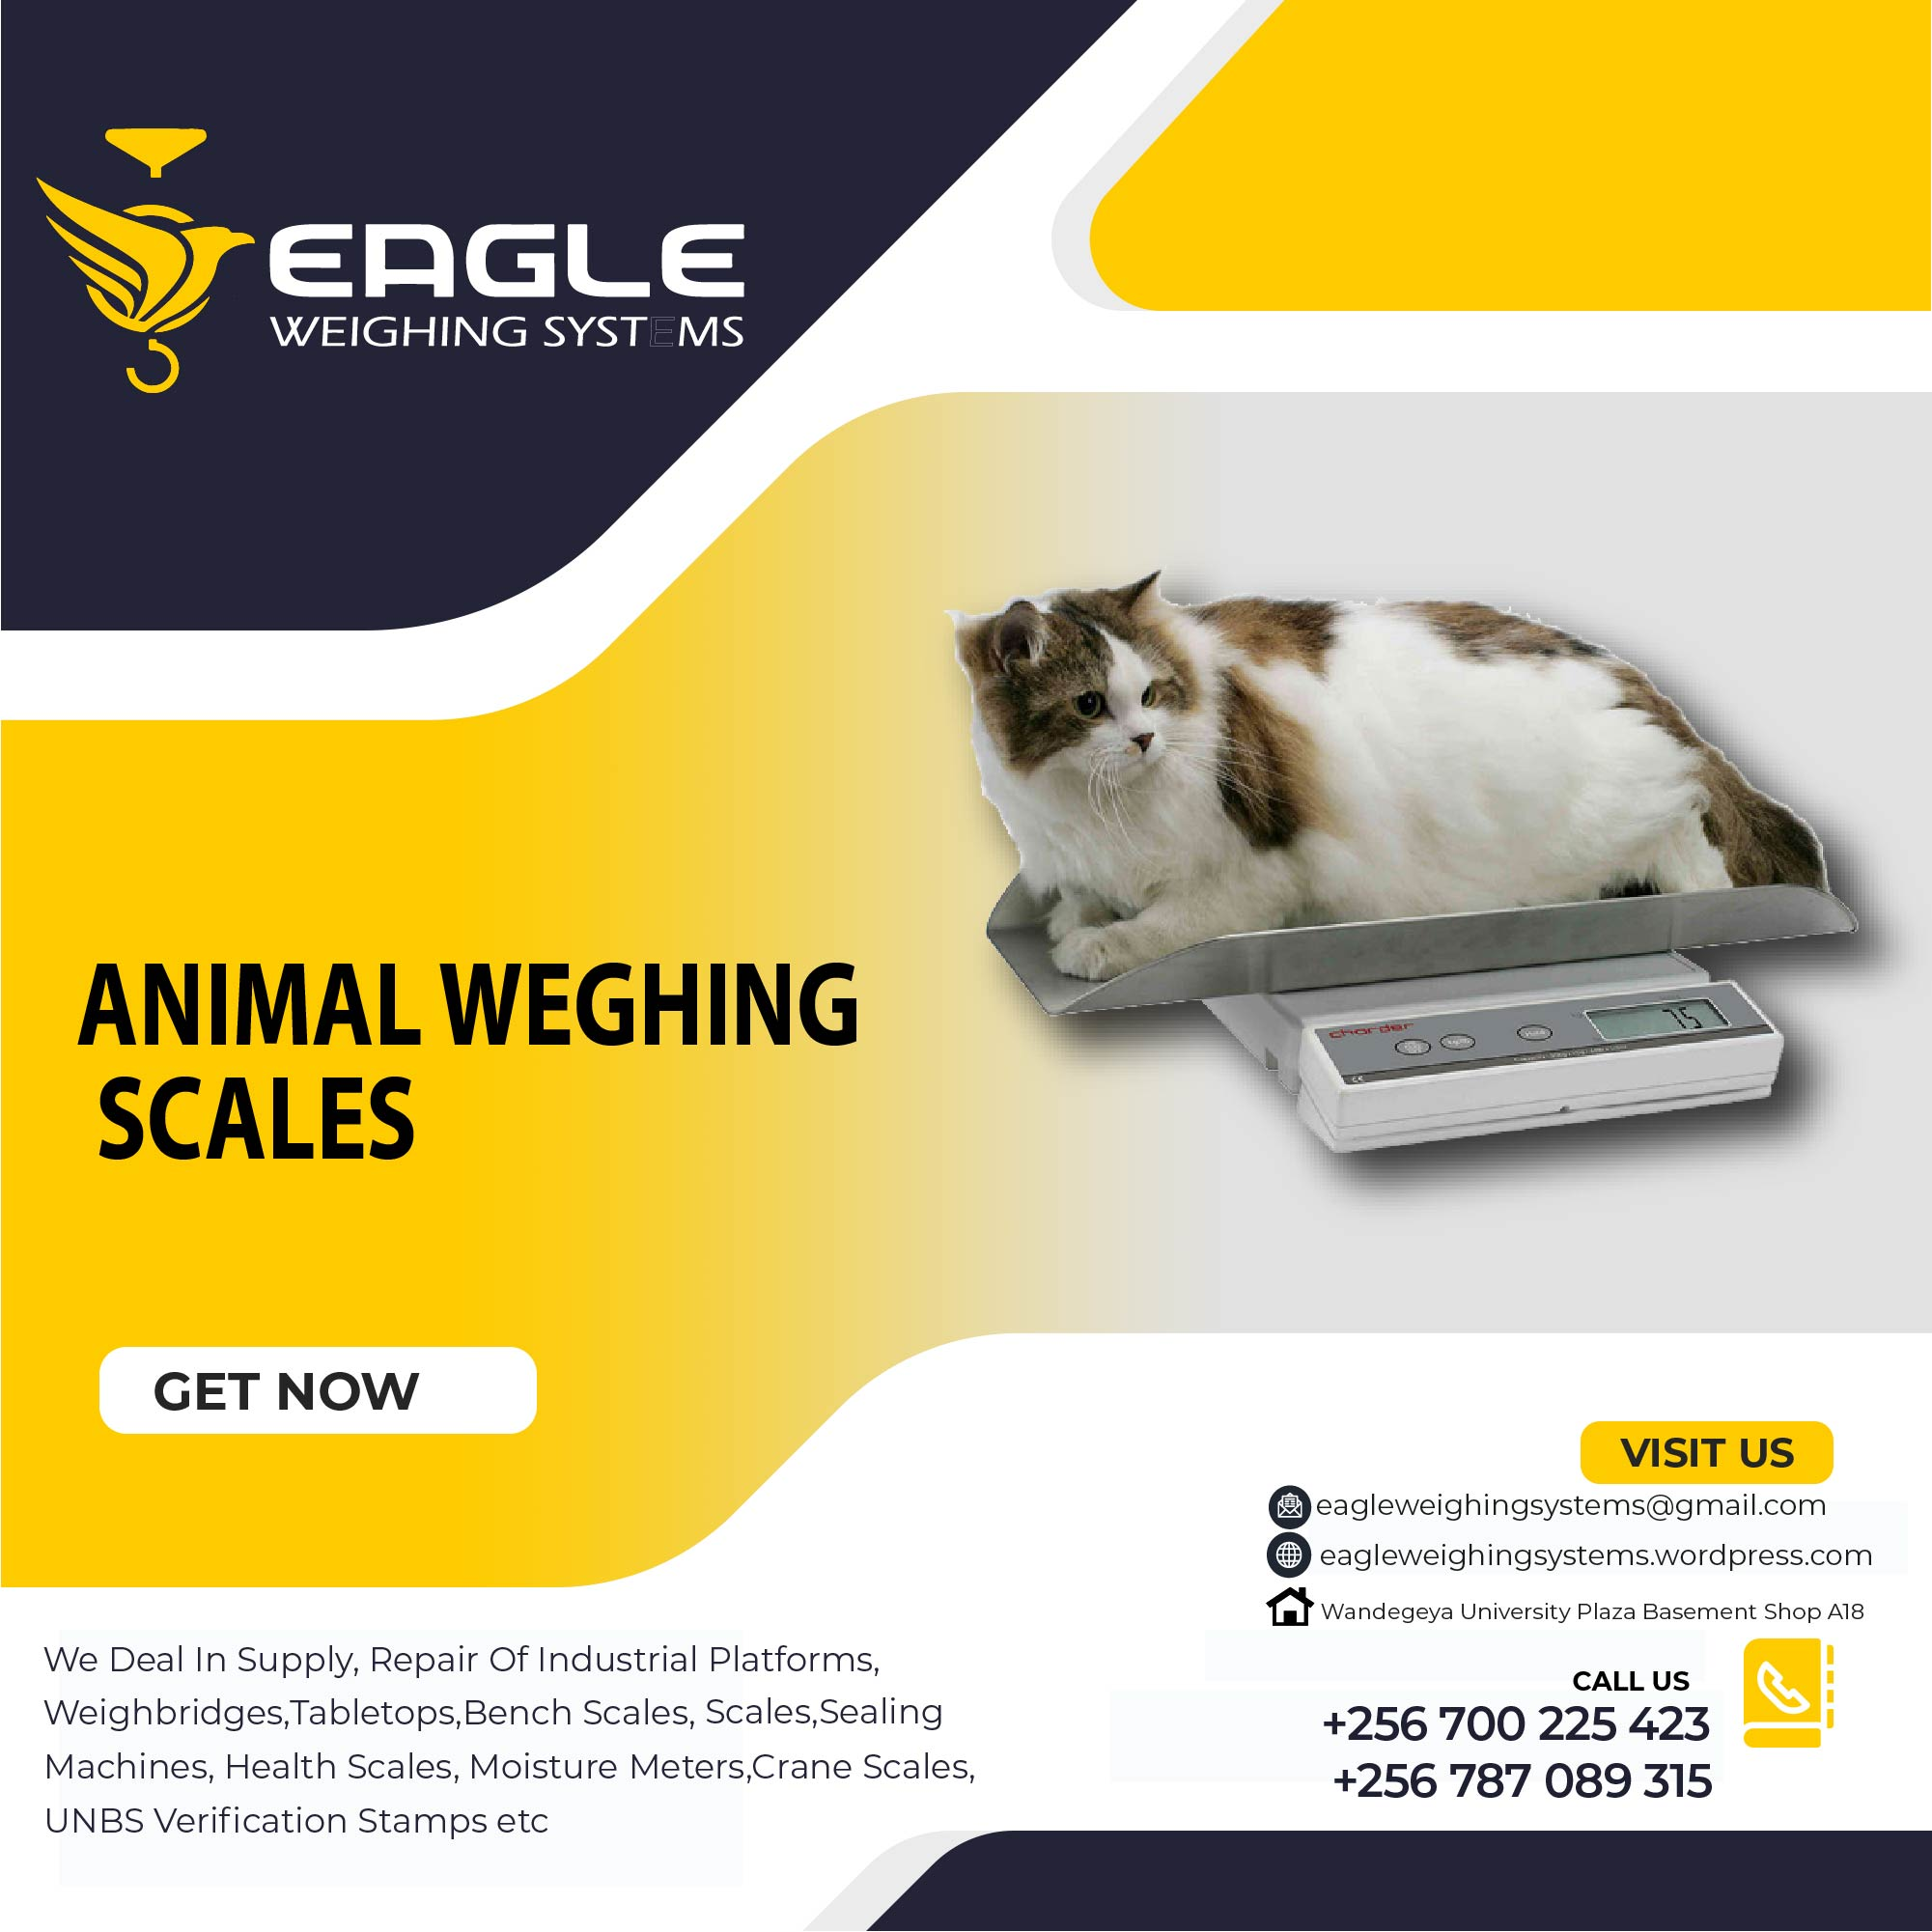 Where to buy Animal digital weighing scales in Kampala'